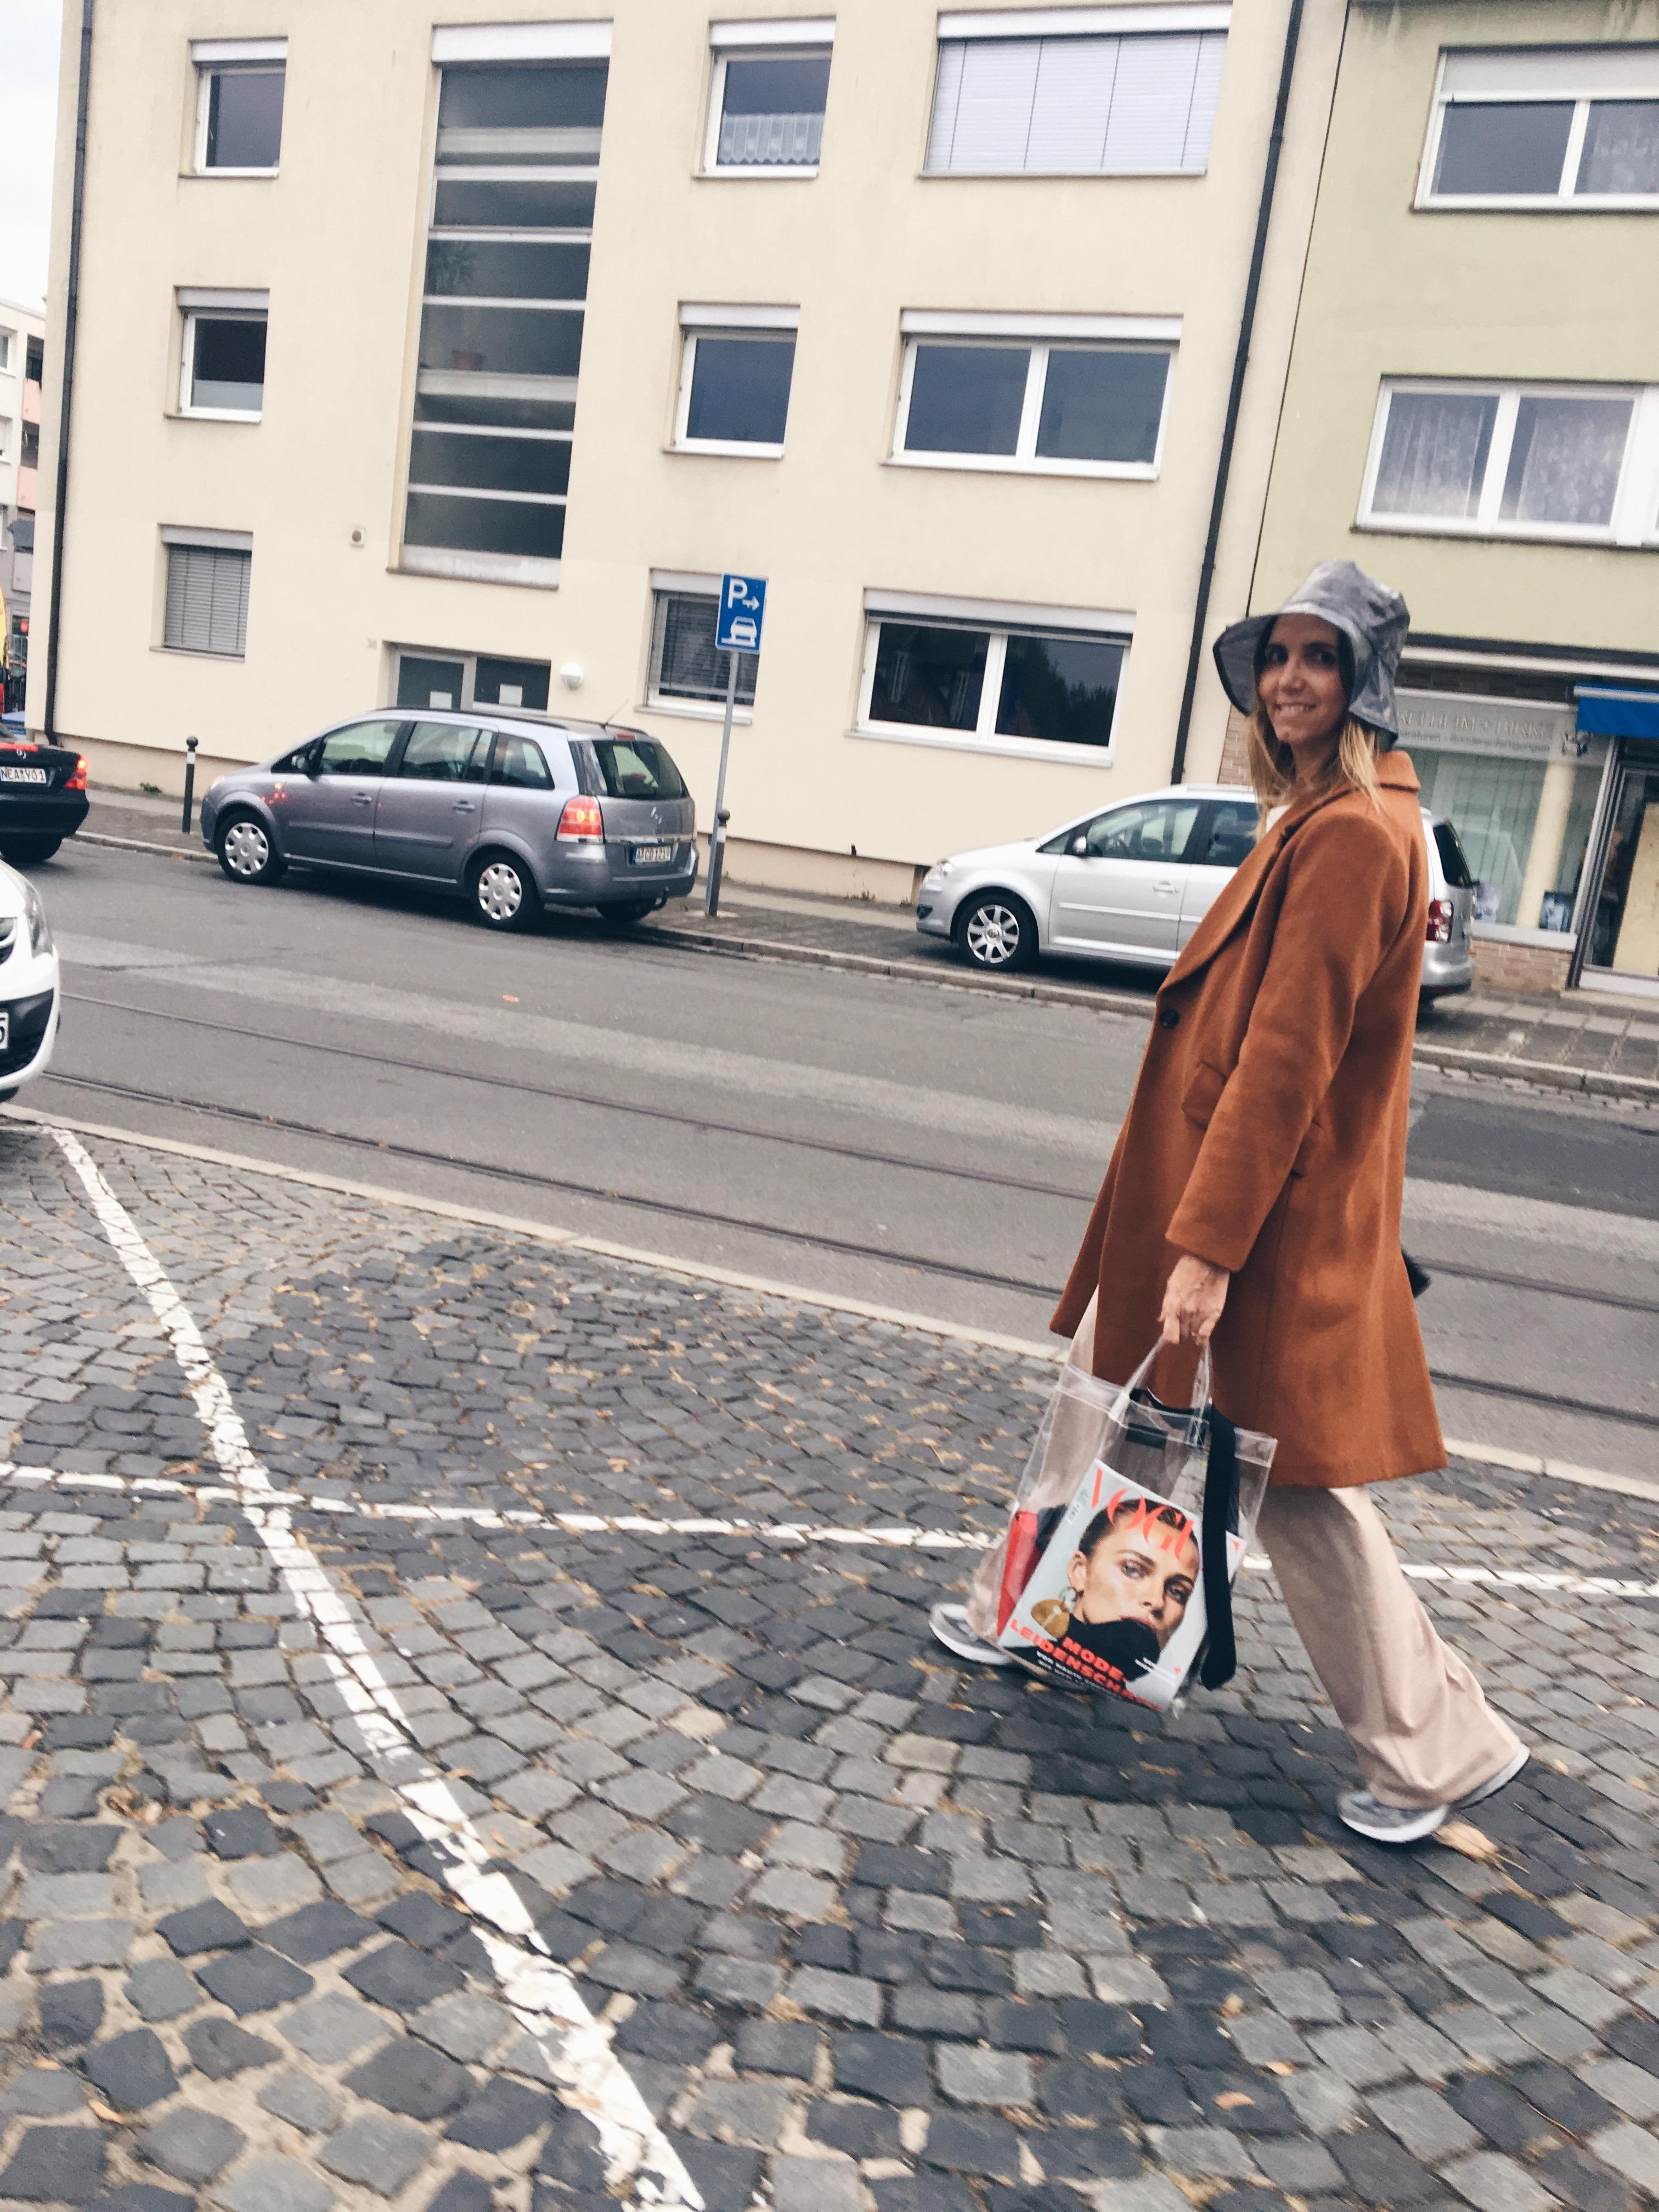 Rainy day in Nuremberg #ootd #outfitoftheday #fashion #fashionblogger #streetstyle 